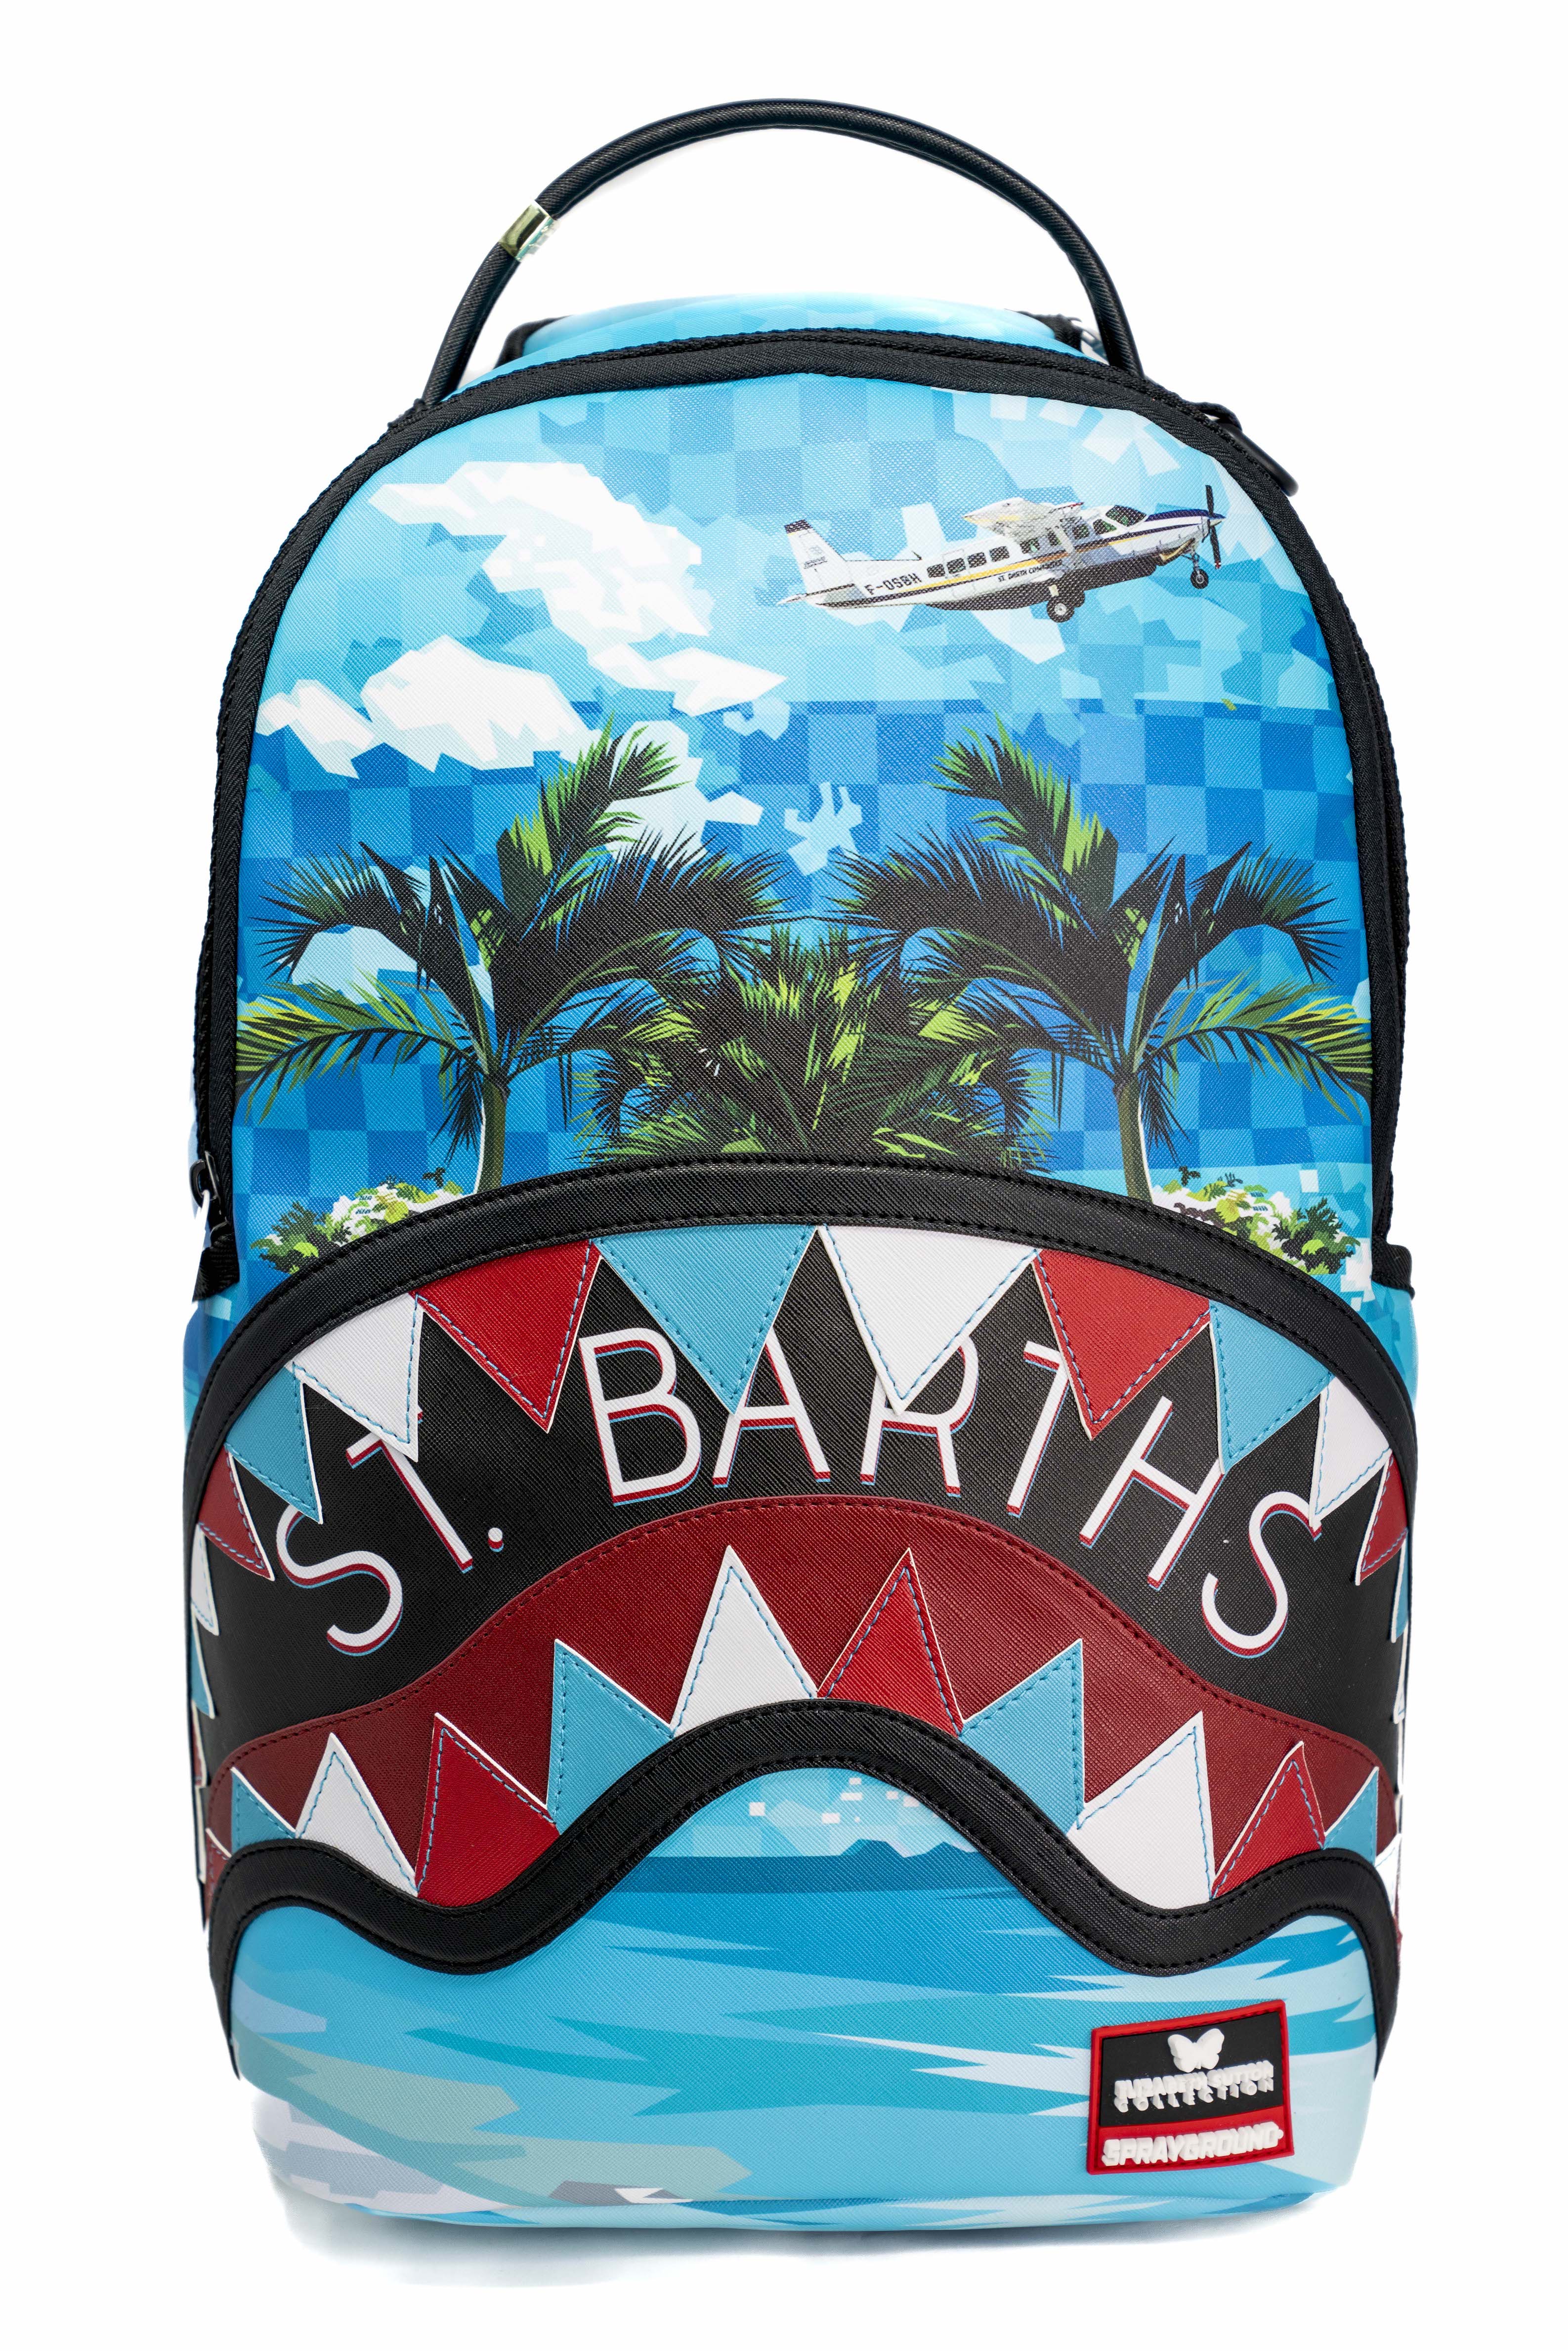 Sprayground checkerboard Shark print Backpack Limited Edition